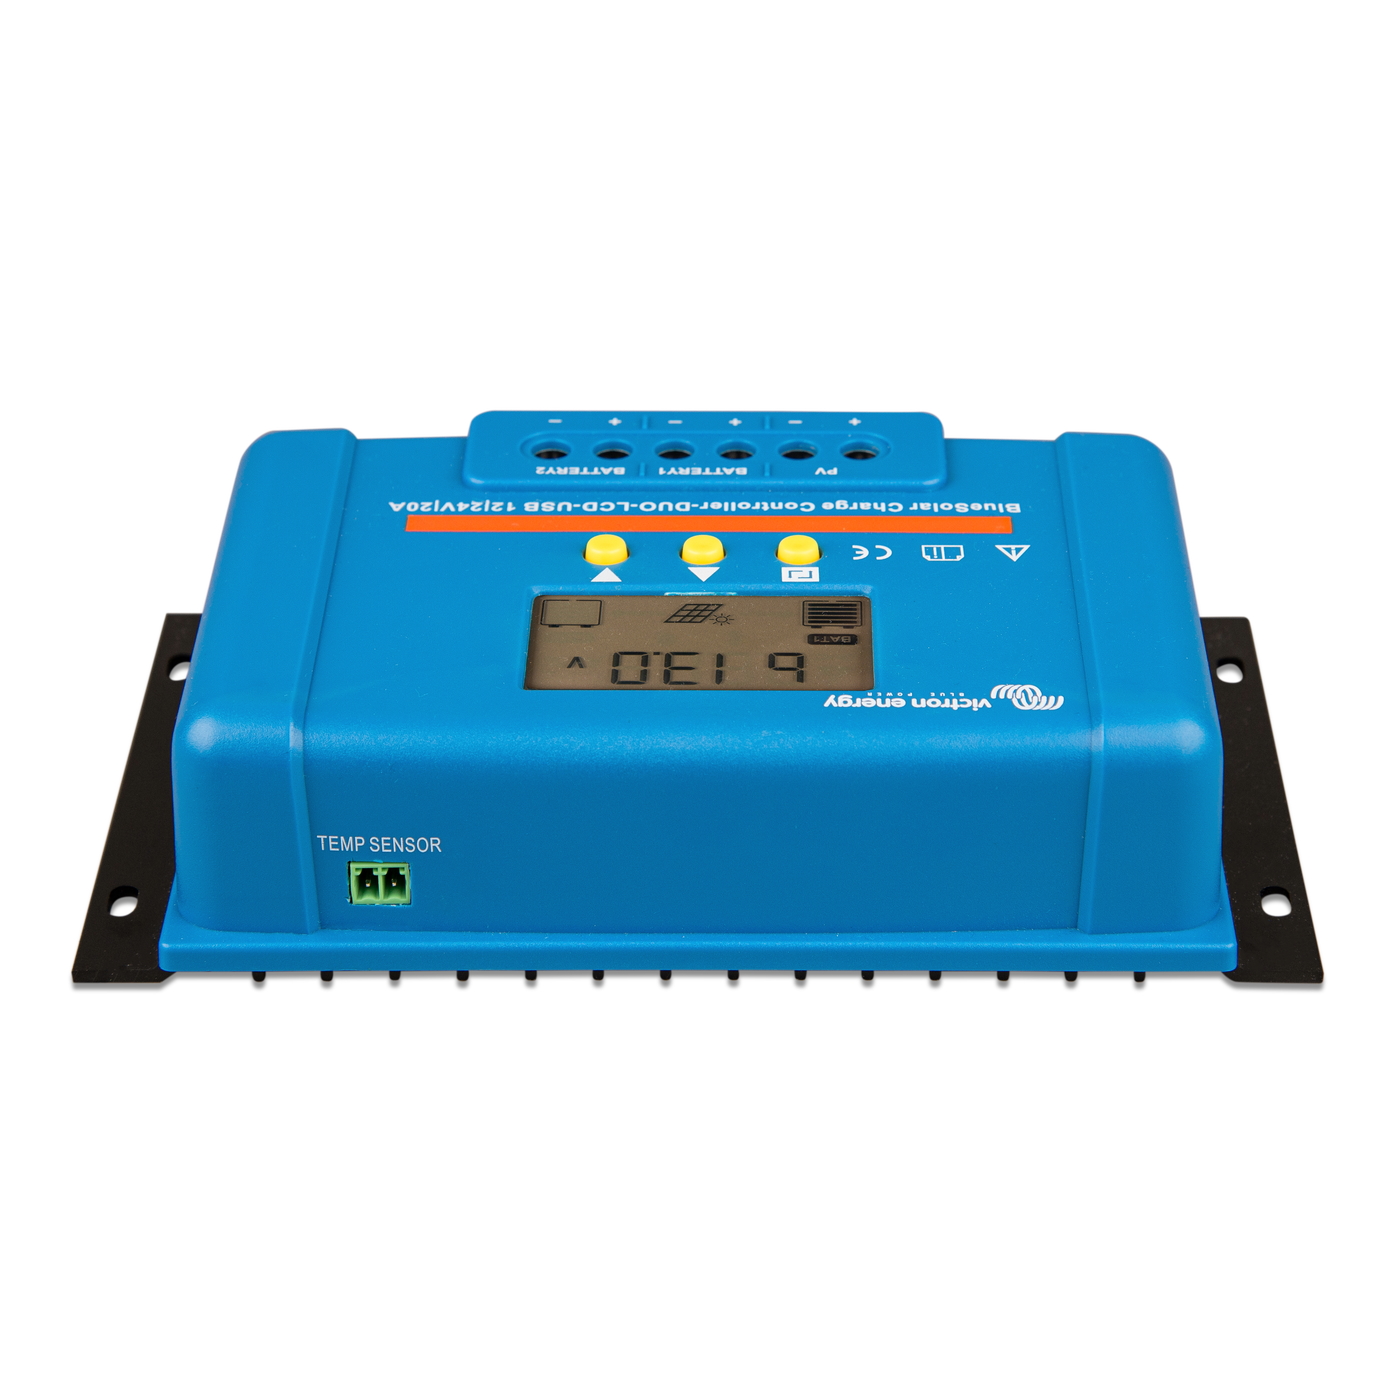 Контроллер заряда Victron Energy Blue Duo 20 solar для солнечных панелей 12/24 В 20 А 184 х 101,5 х 47,1 мм, Osculati 12.033.04